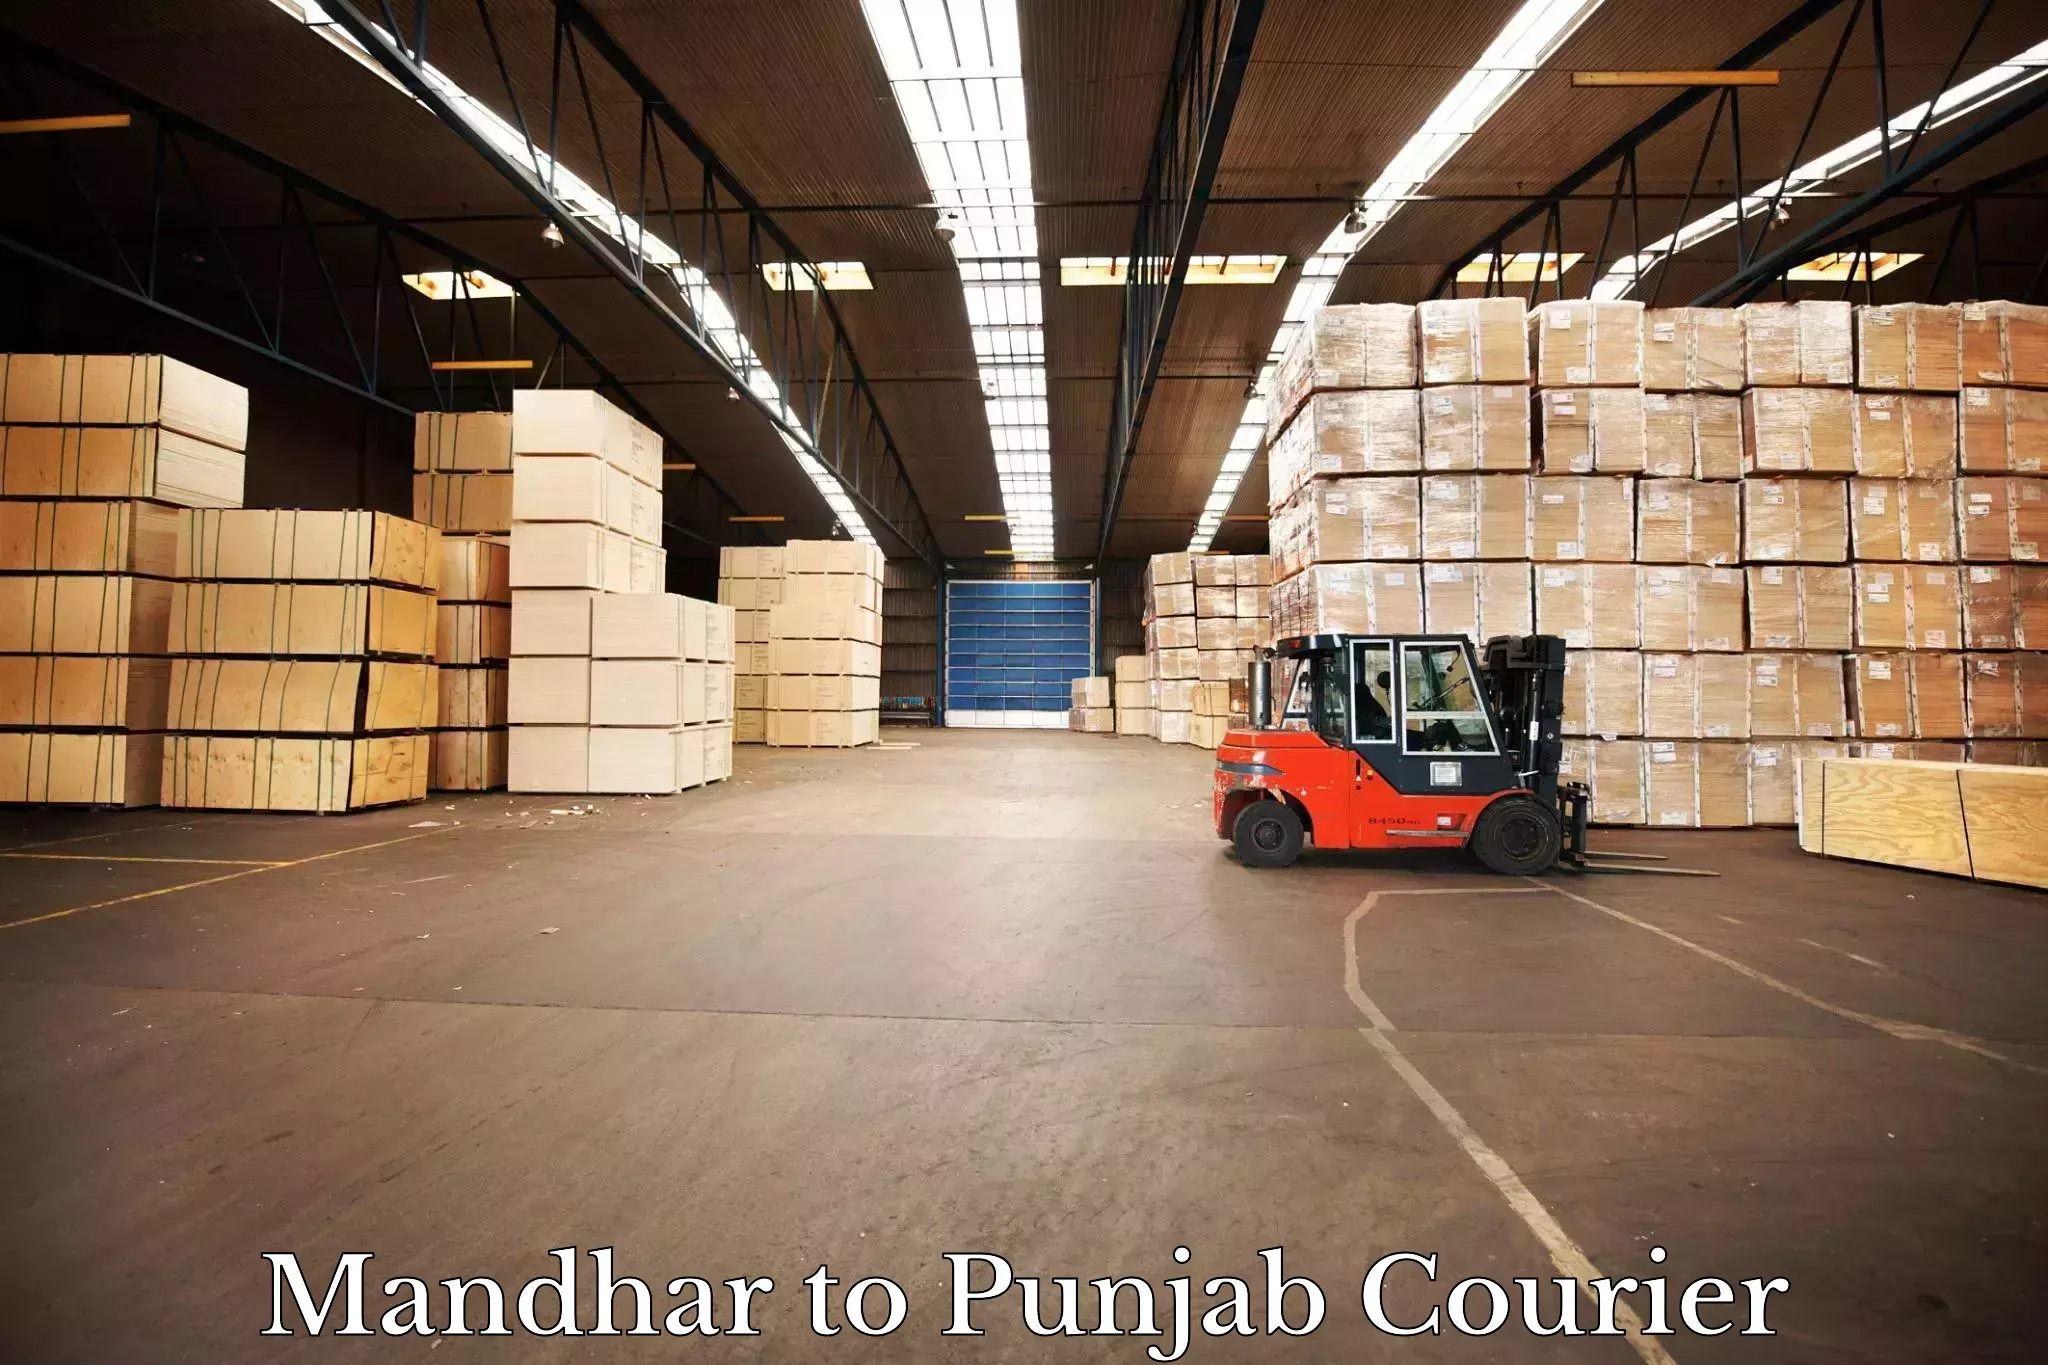 User-friendly delivery service Mandhar to Punjab